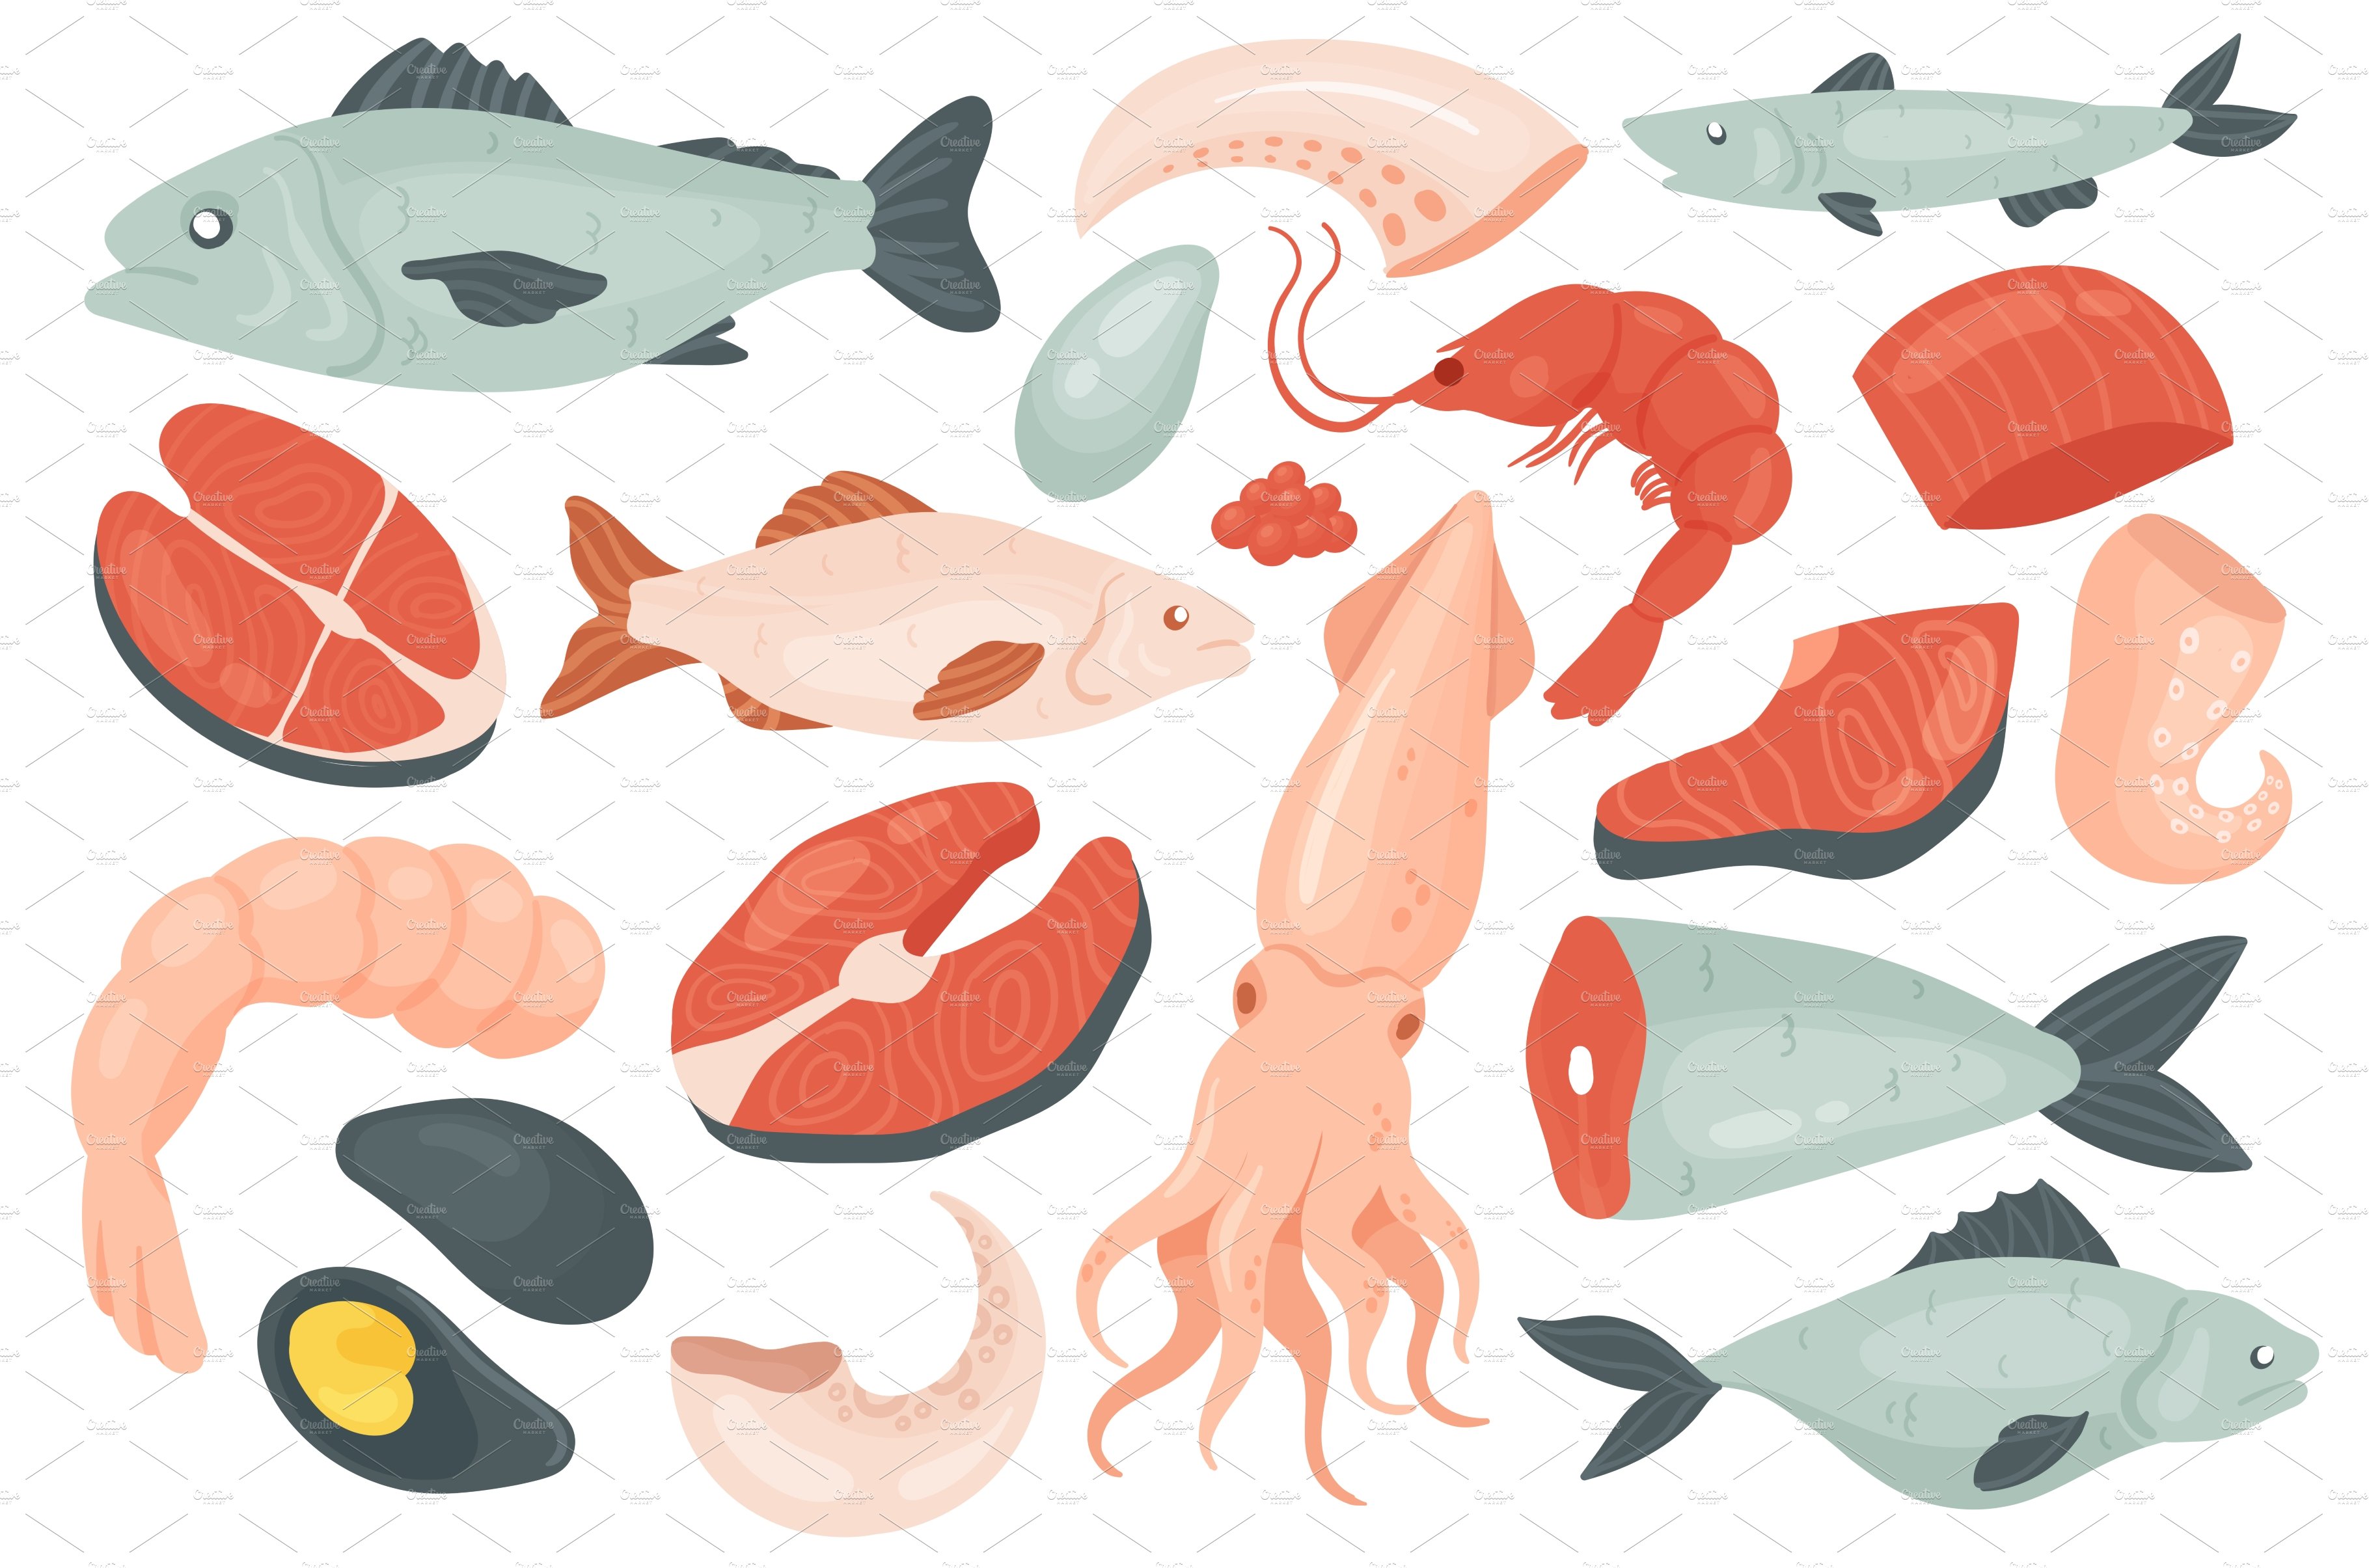 Seafood set cover image.